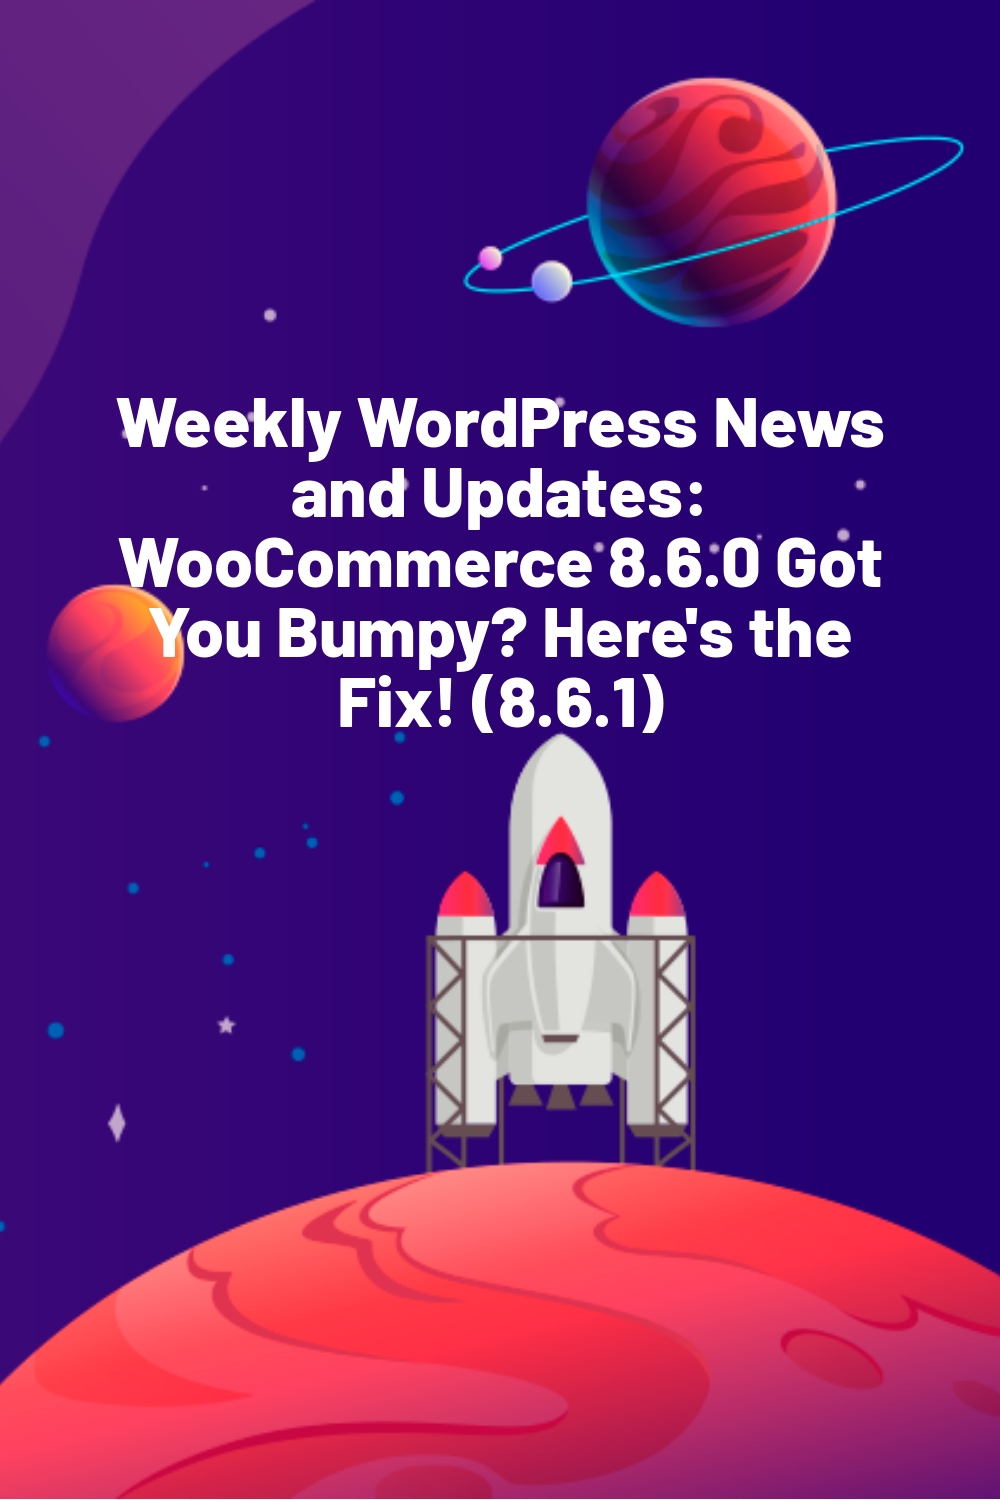 Weekly WordPress News and Updates: WooCommerce 8.6.0 Got You Bumpy? Here’s the Fix! (8.6.1)